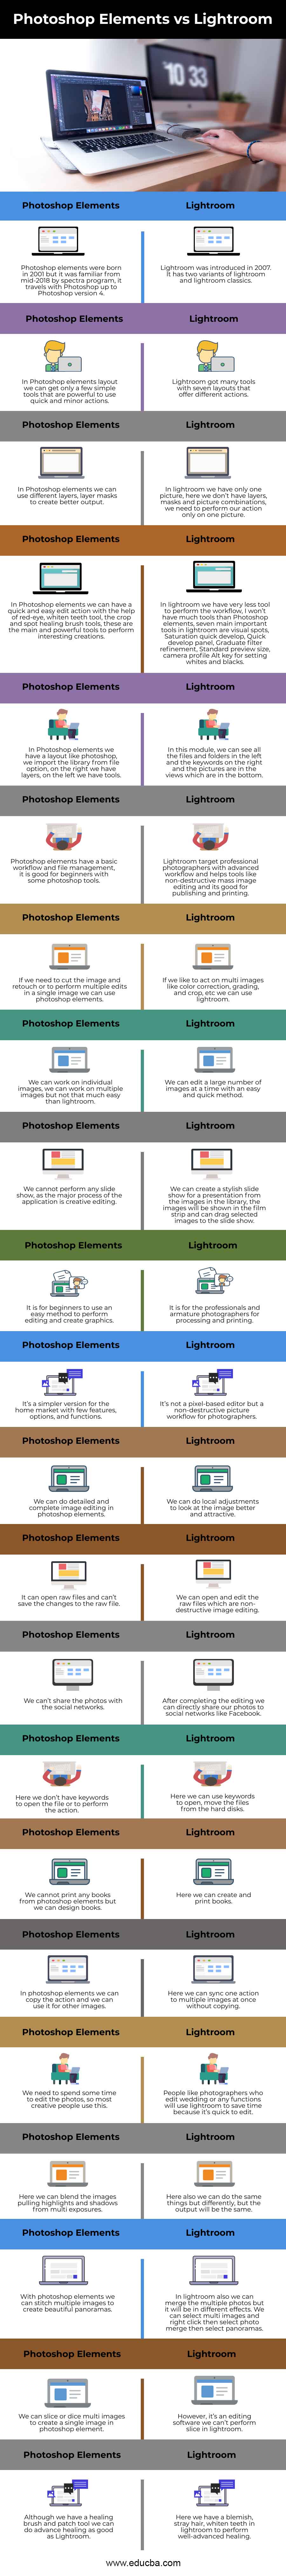 Photoshop Elements vs Lightroom info